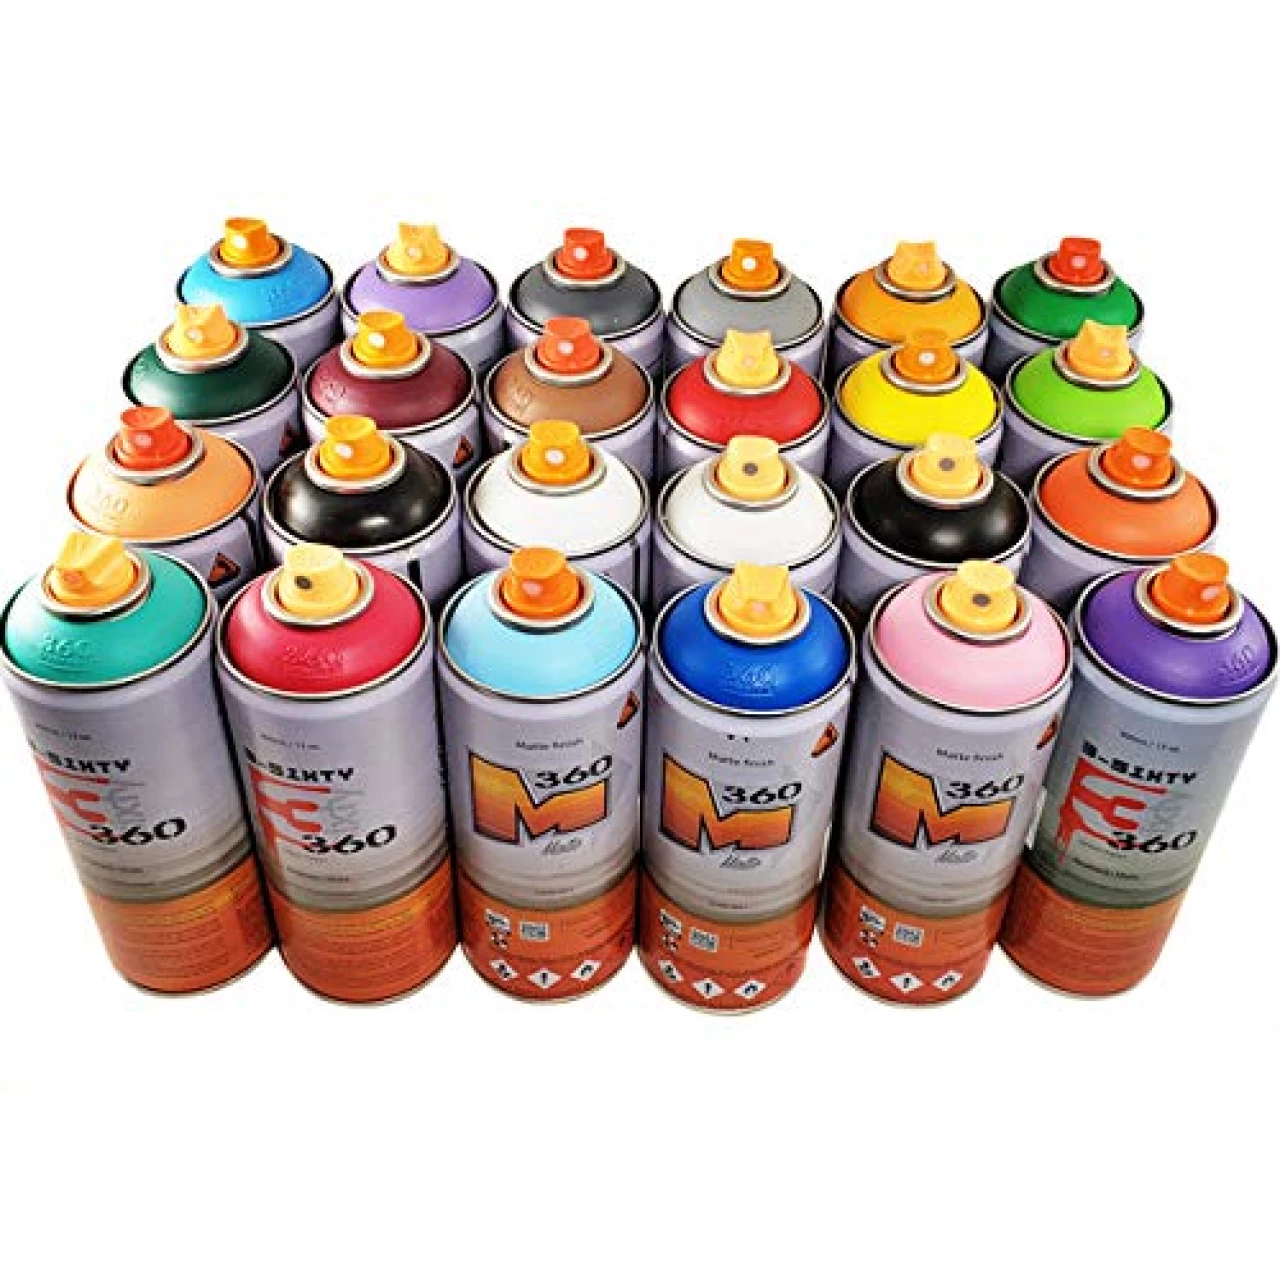 3-Sixty 360 400ml Matte Finish Main Colors Set of 24 Graffiti Street Art Mural Spray Paint